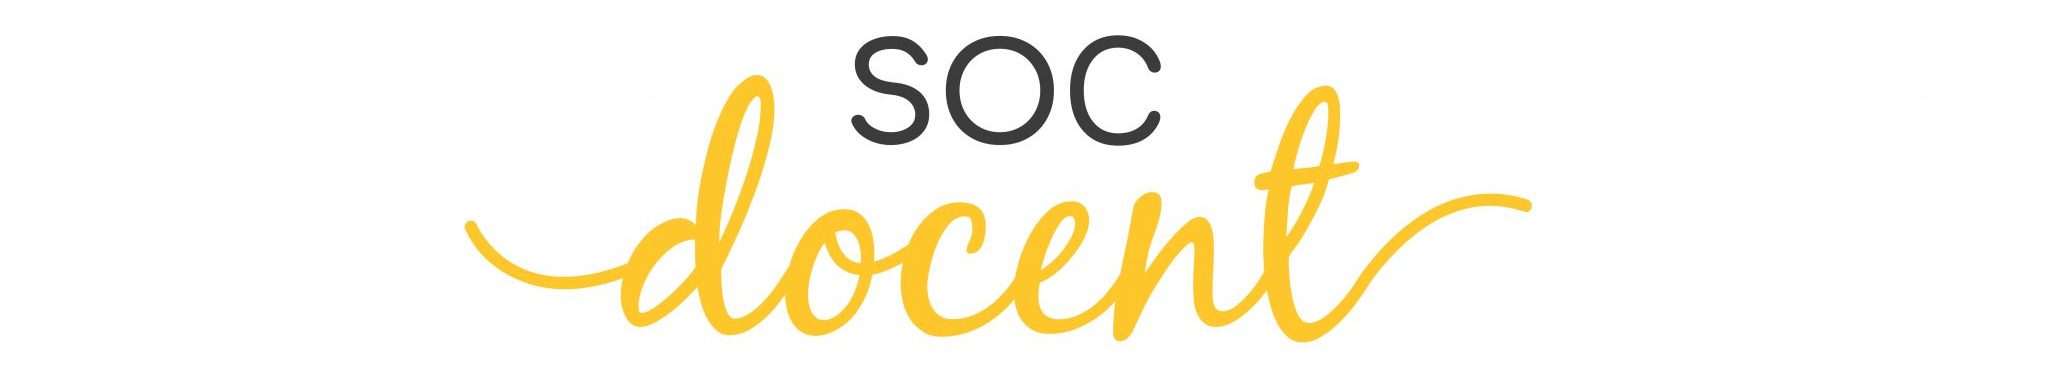 SOC_Docent-01